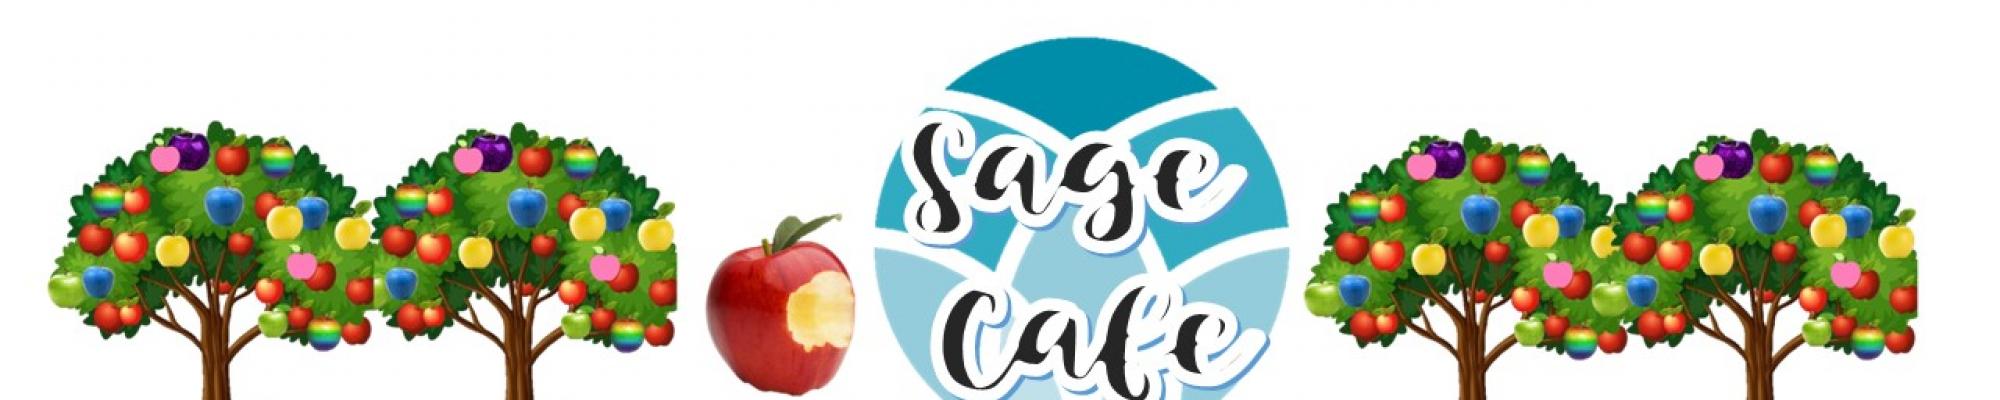 Sage cafe apple trees